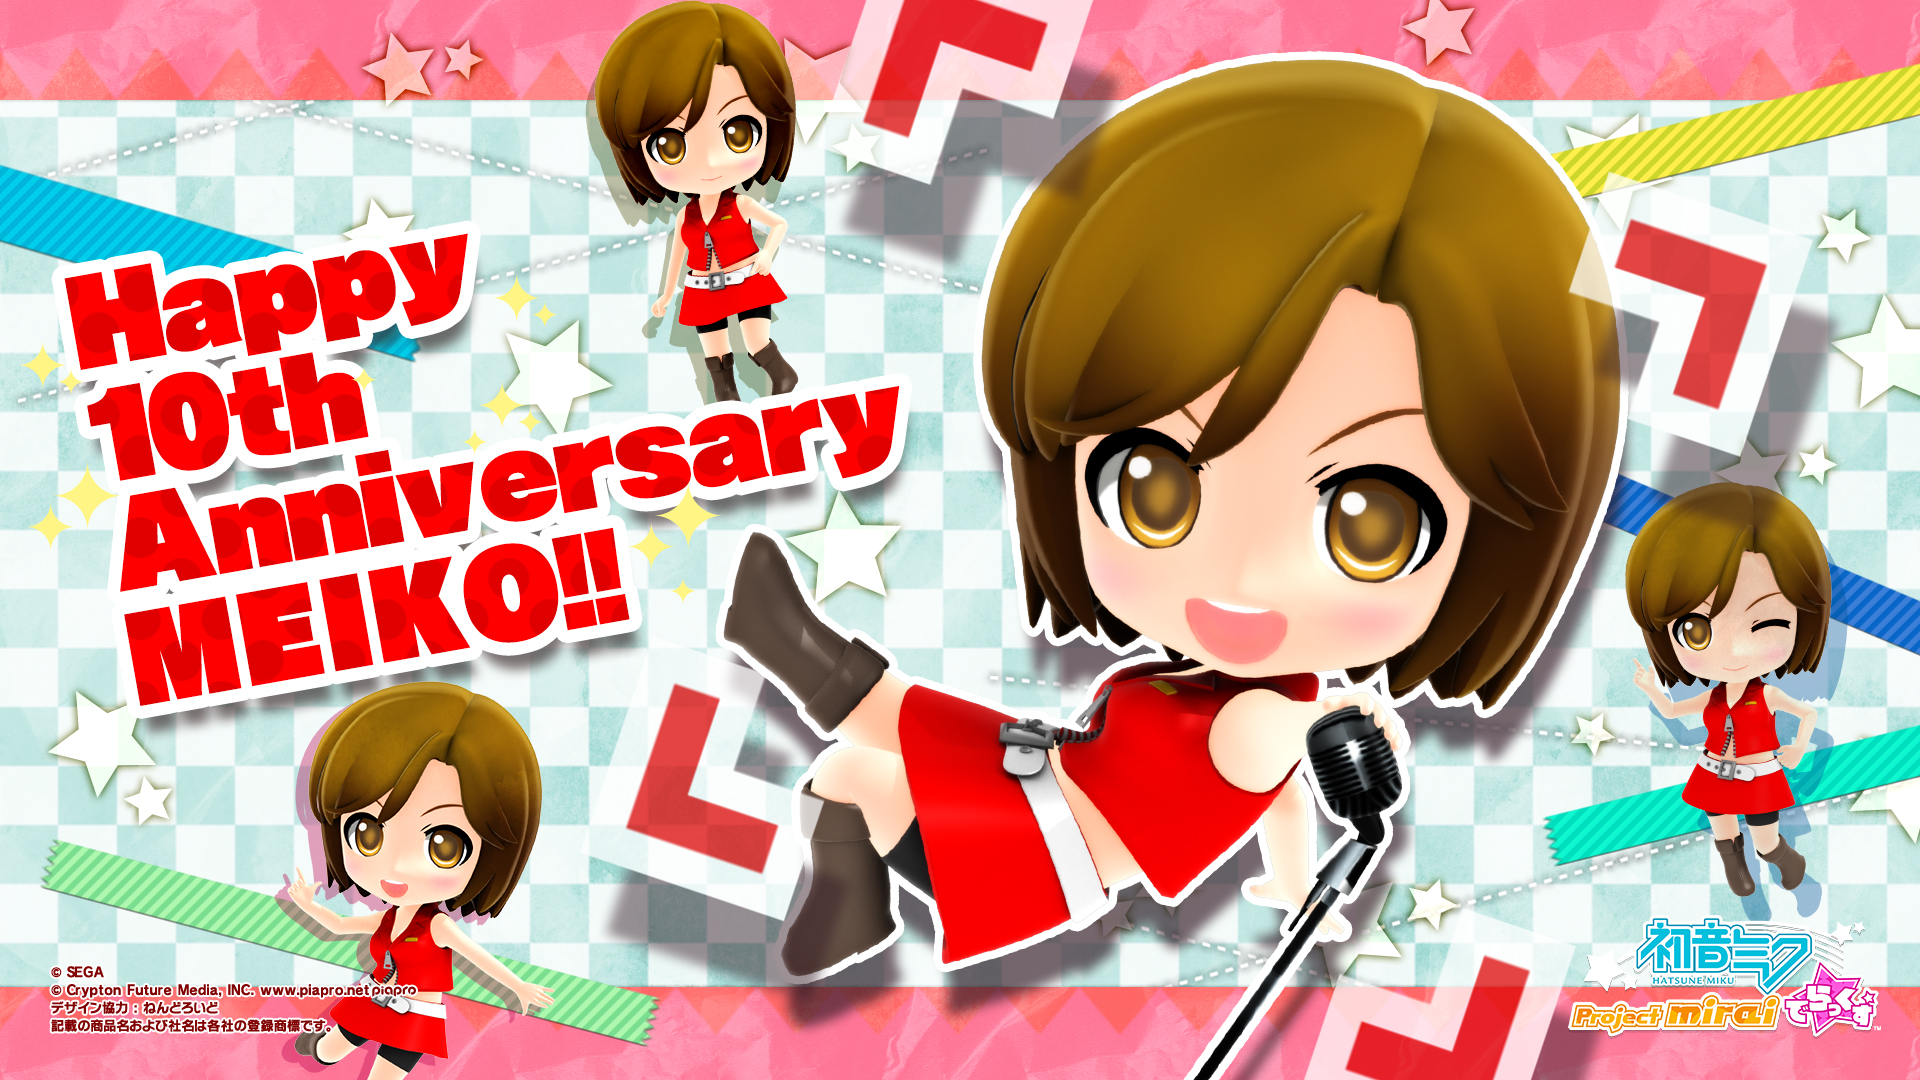 Video Sega celebrates the 10th Birthday of Vocaloid Meiko with a